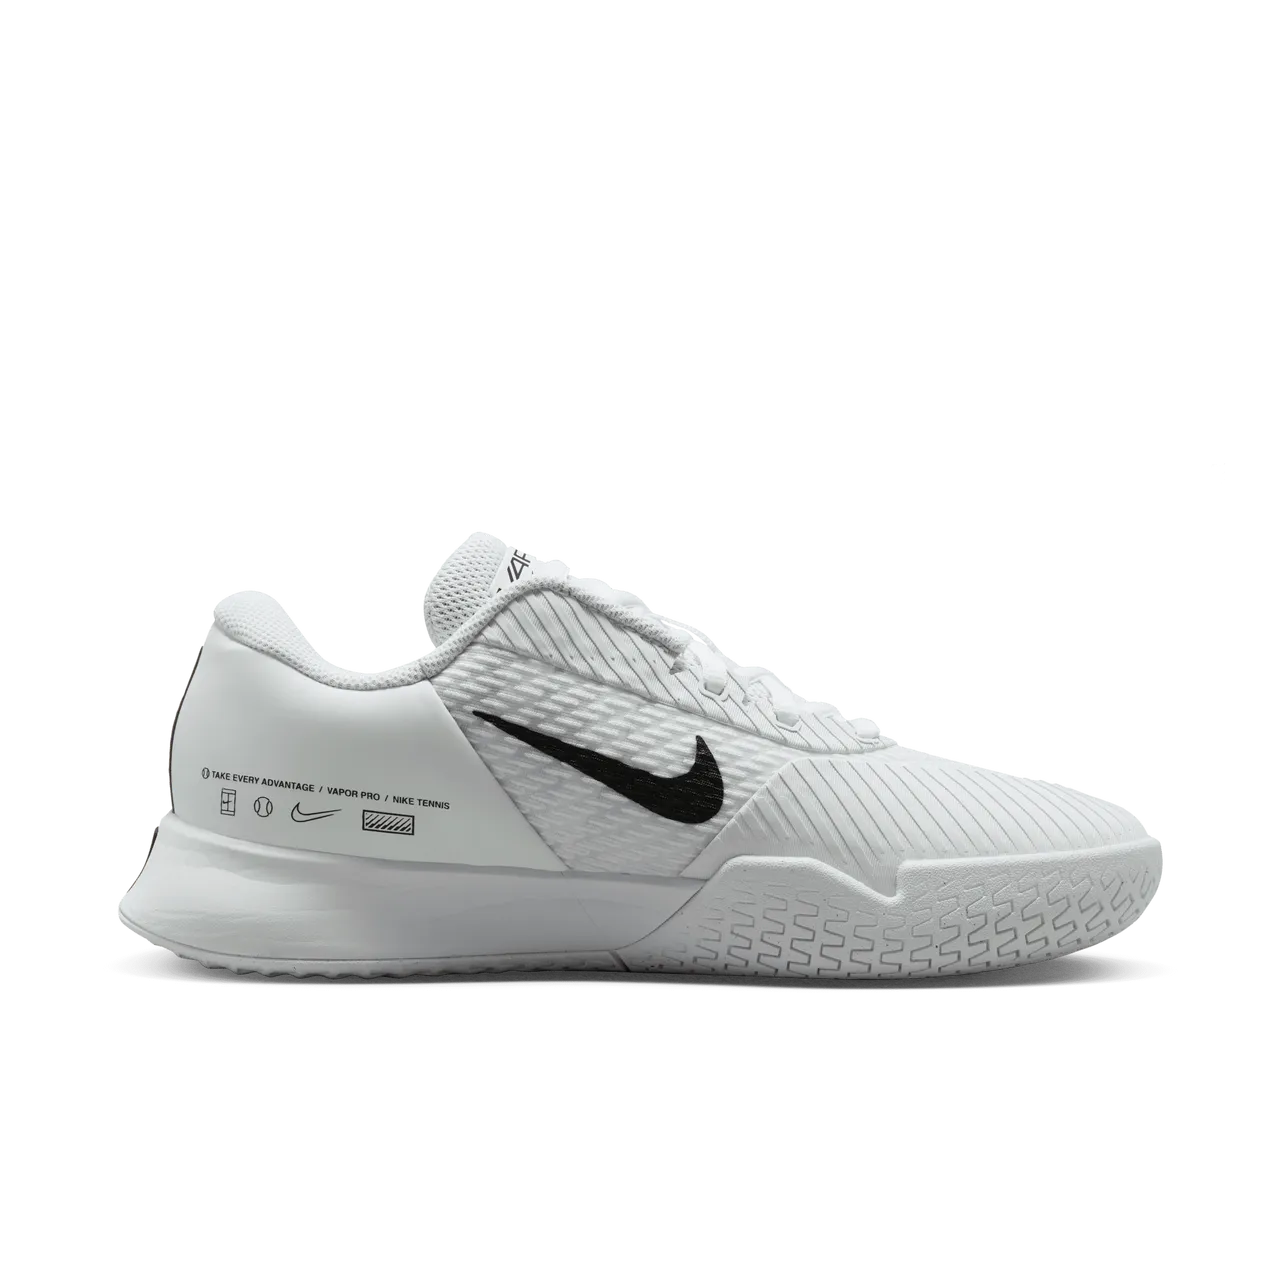 NikeCourt Air Zoom Vapor Pro 2 Women's Hard Court Tennis Shoes - White